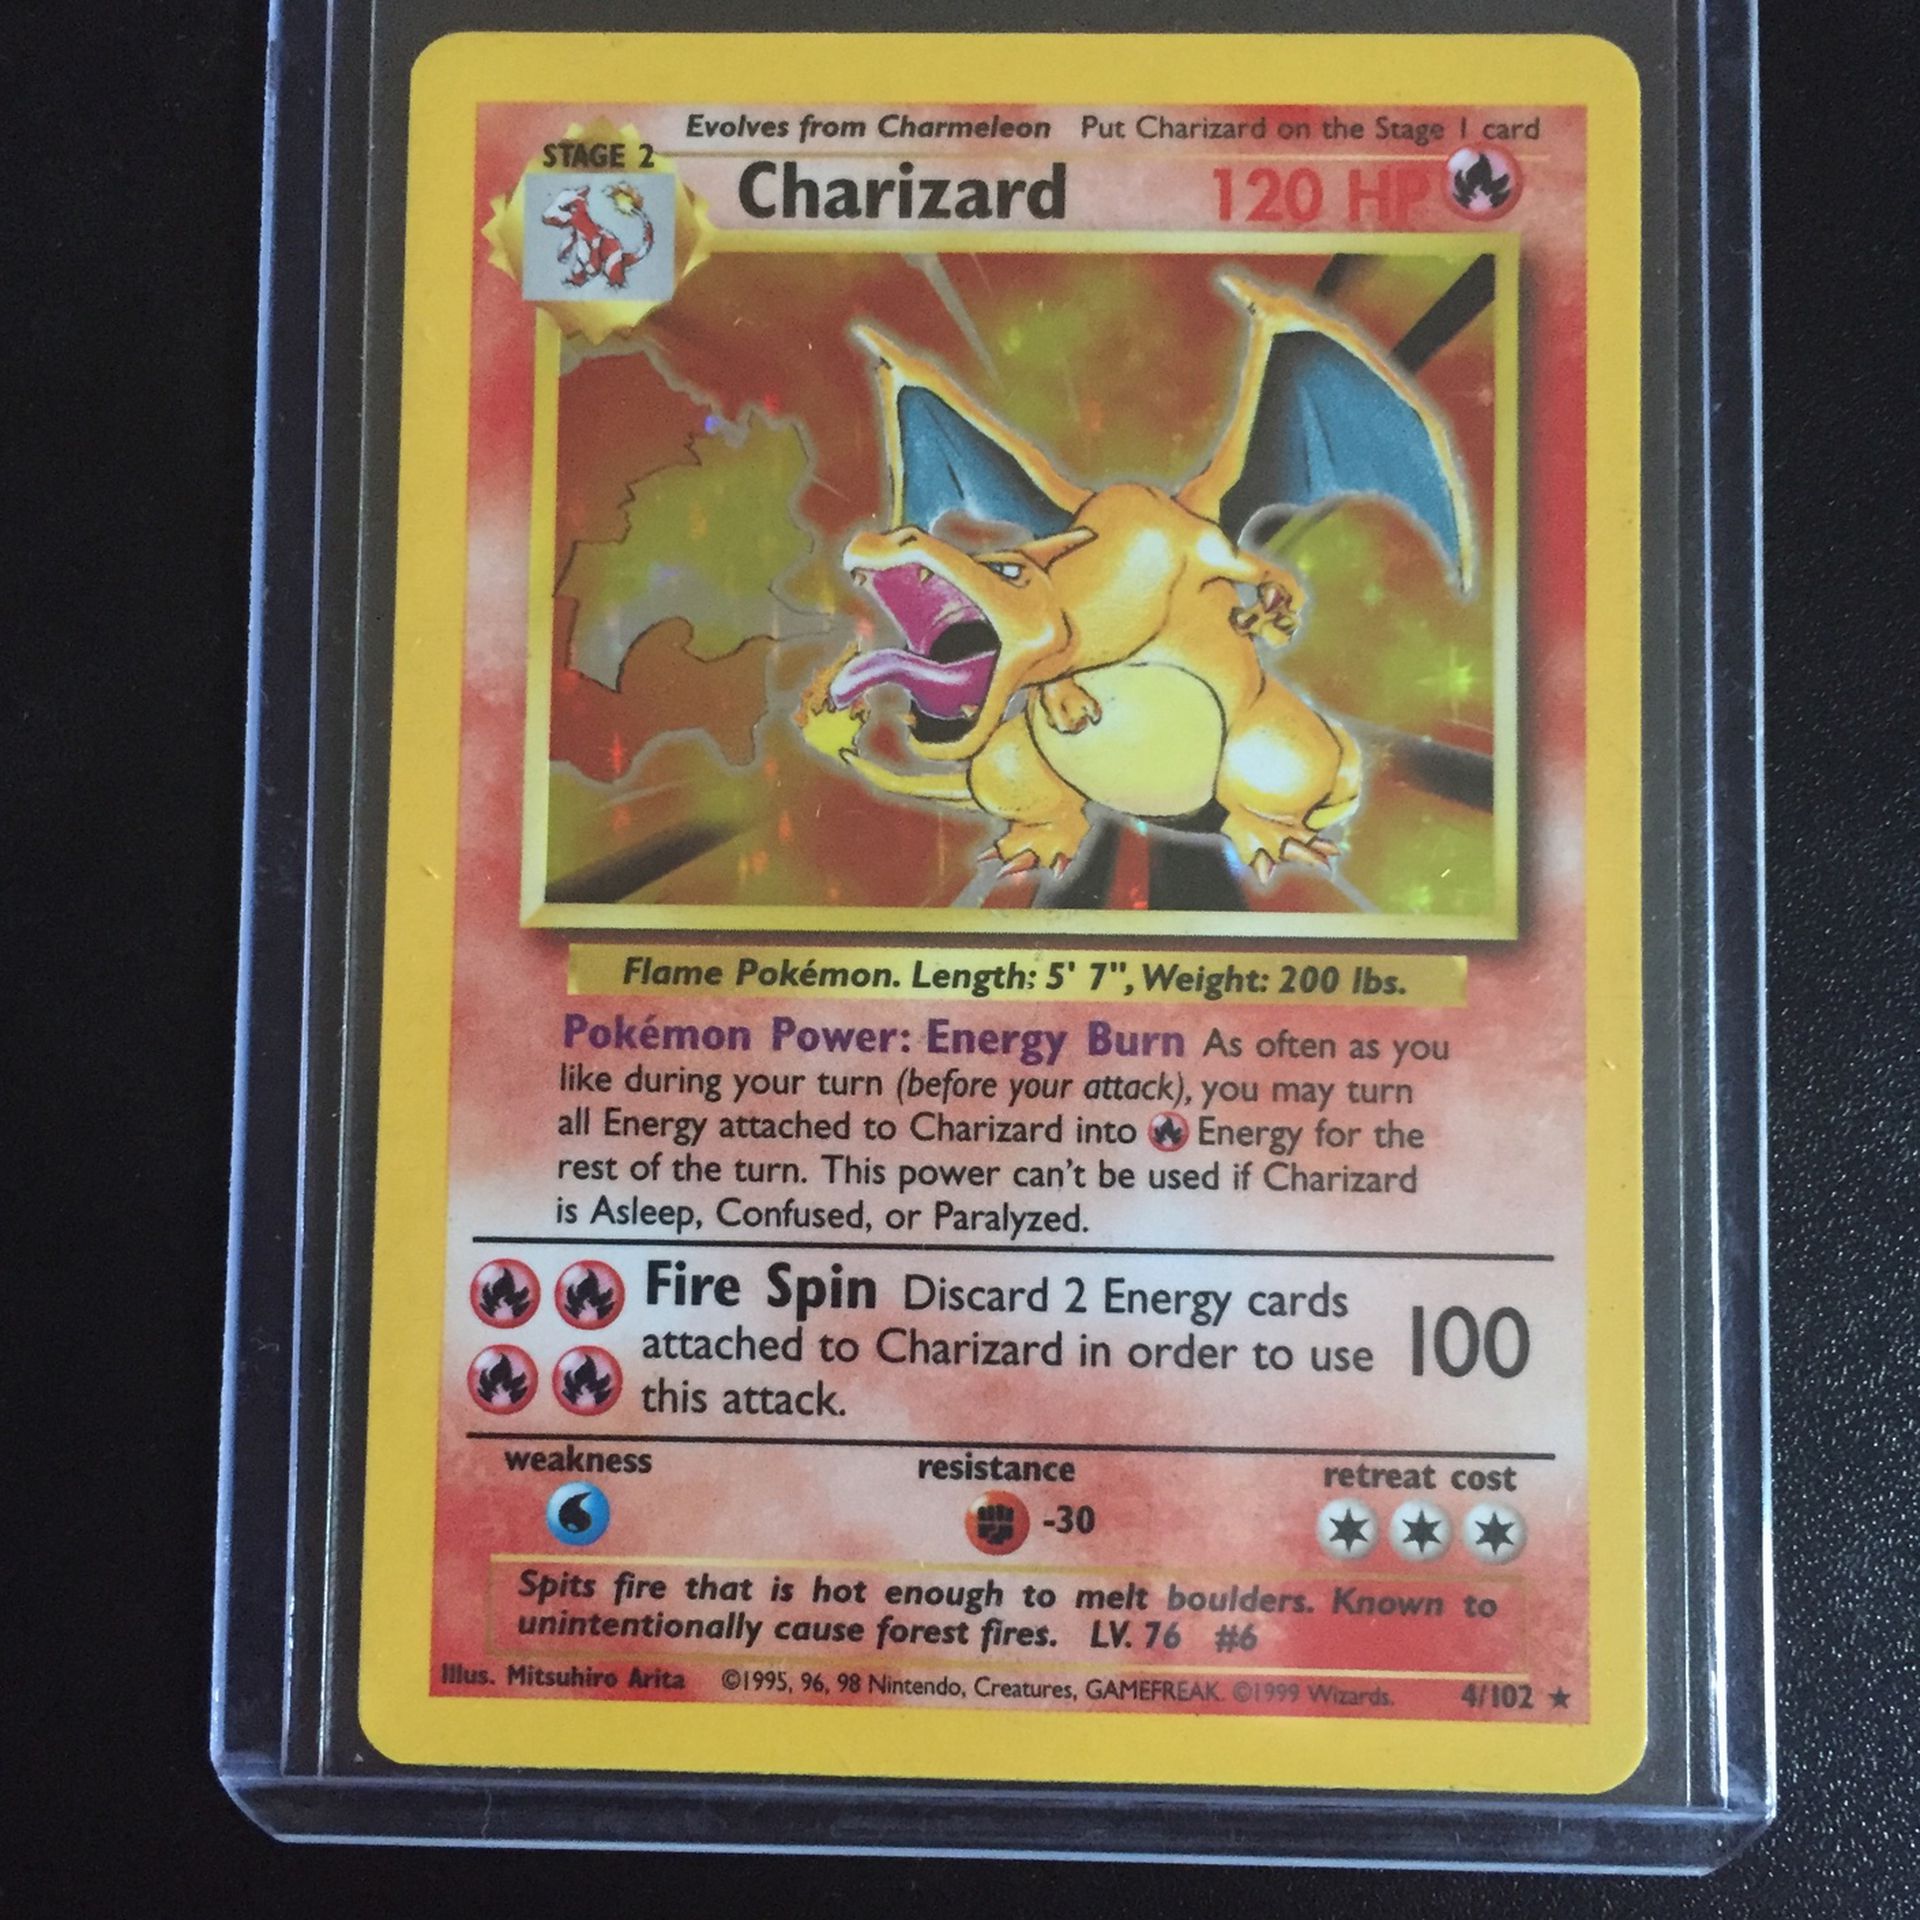 1999 Base Set Charizard Pokemon Card